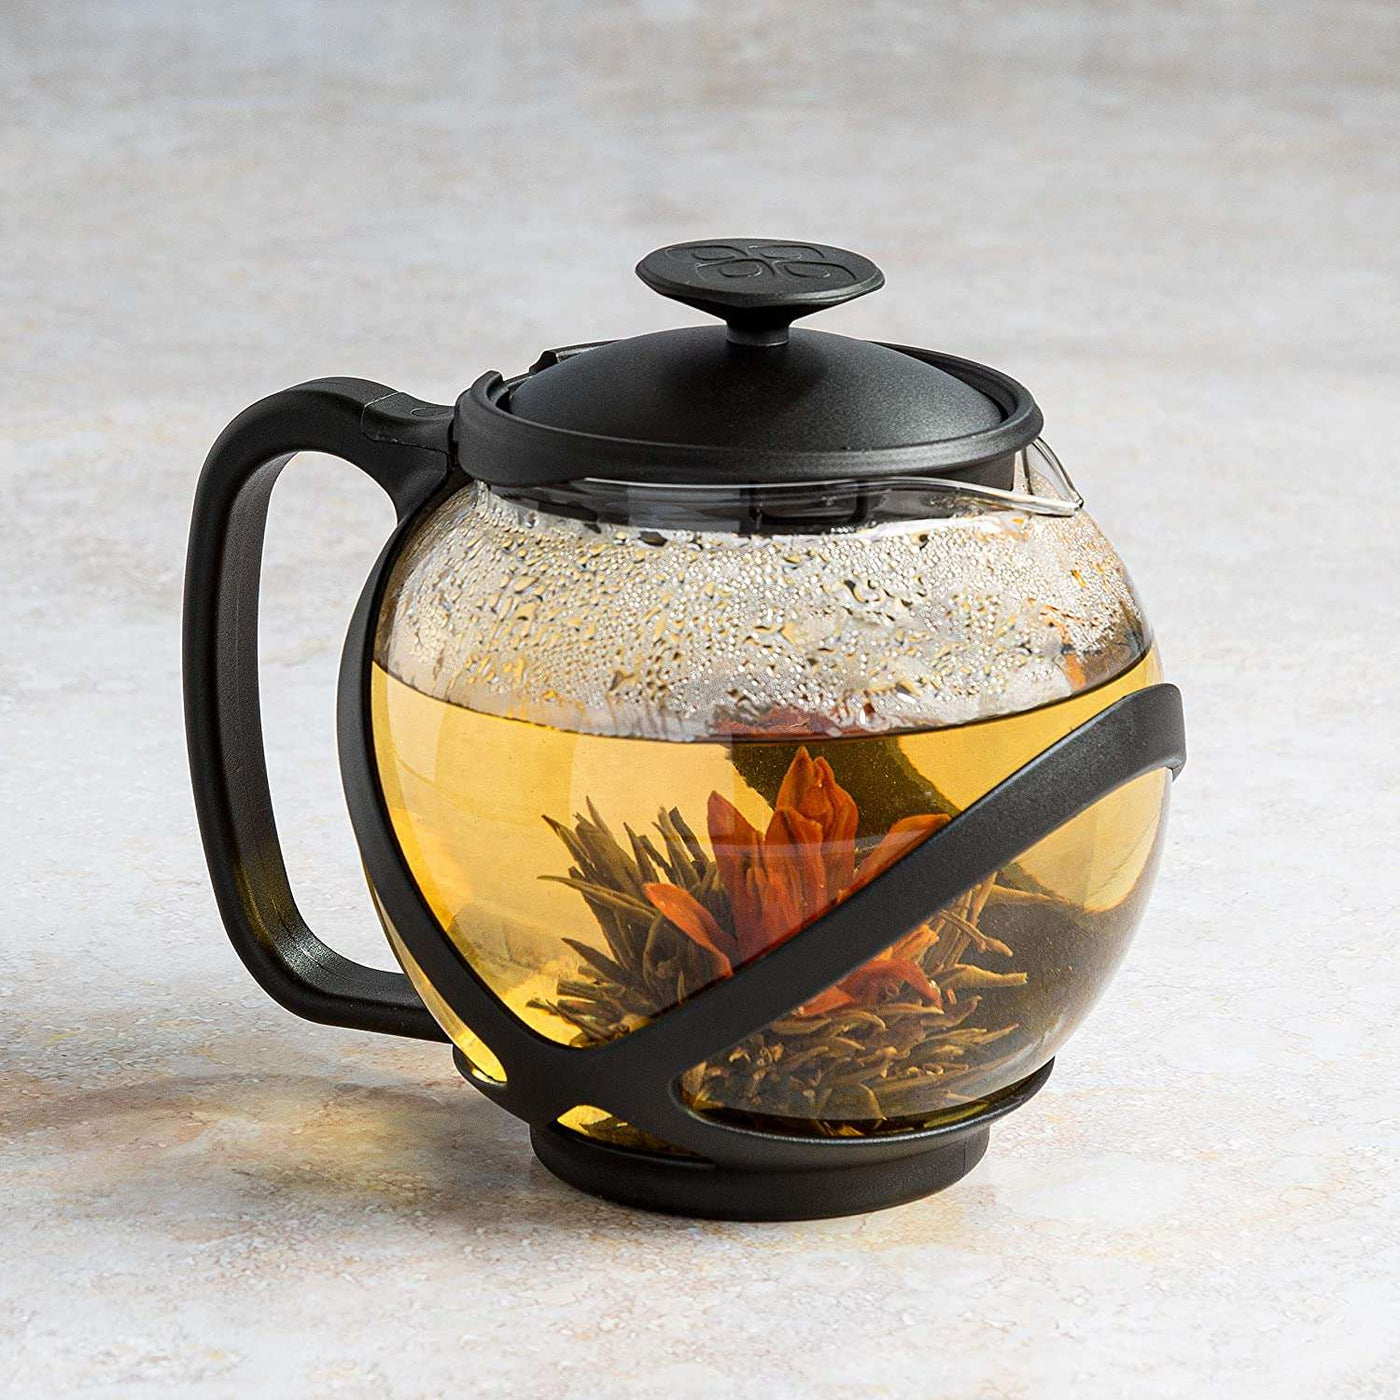 Primula Today Teapot, Glass, 40 Ounce, Black